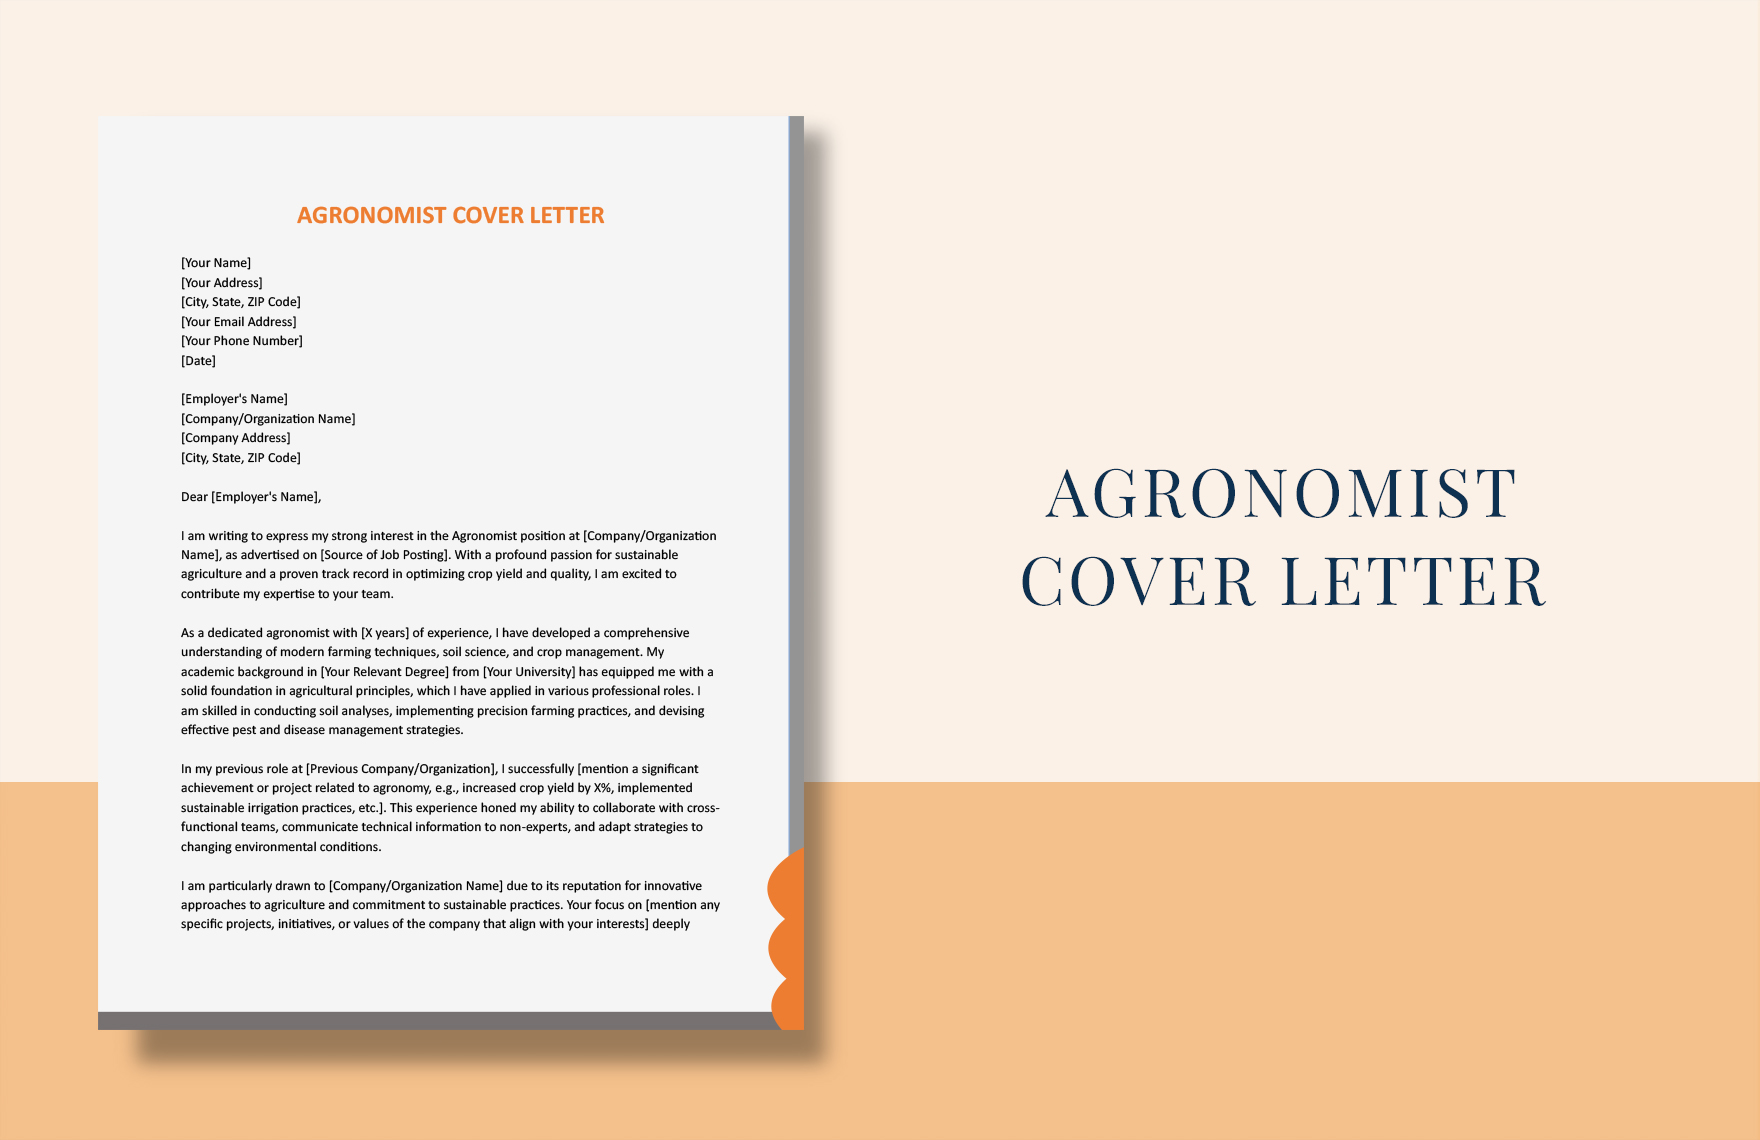 Agronomist Cover Letter in Word, Google Docs